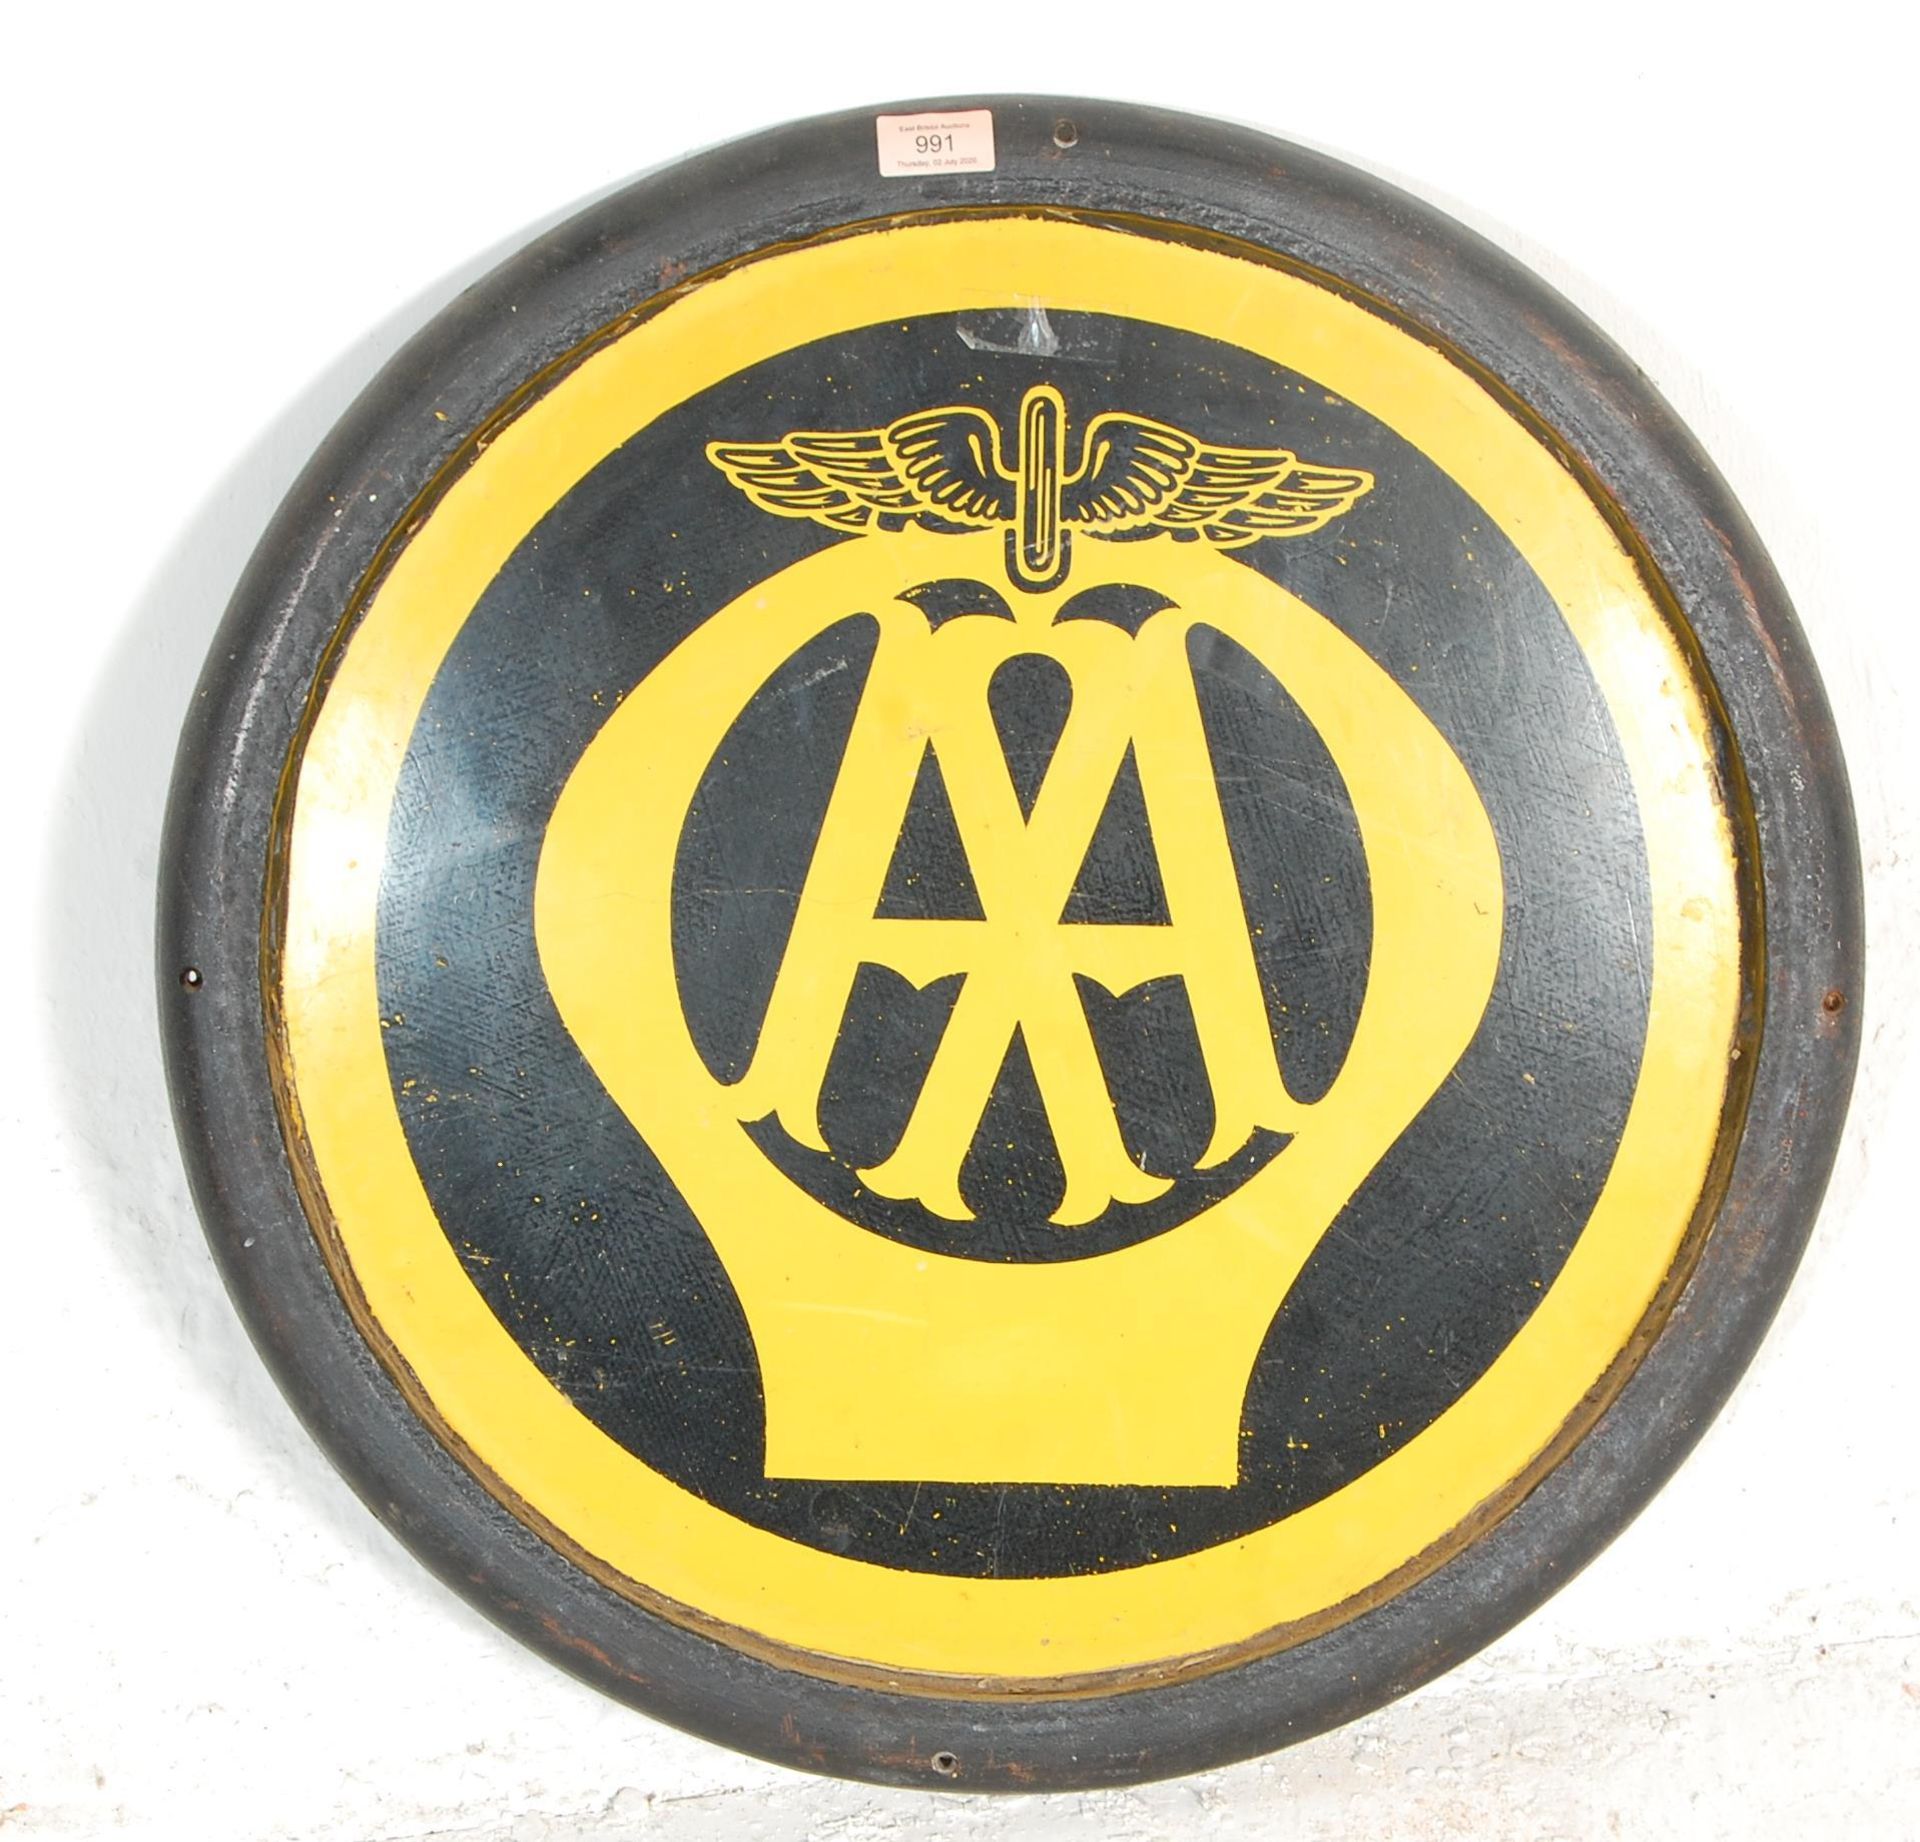 Automobile Association / AA - a rare original vintage unusual large cast iron ' AA ' road / garage